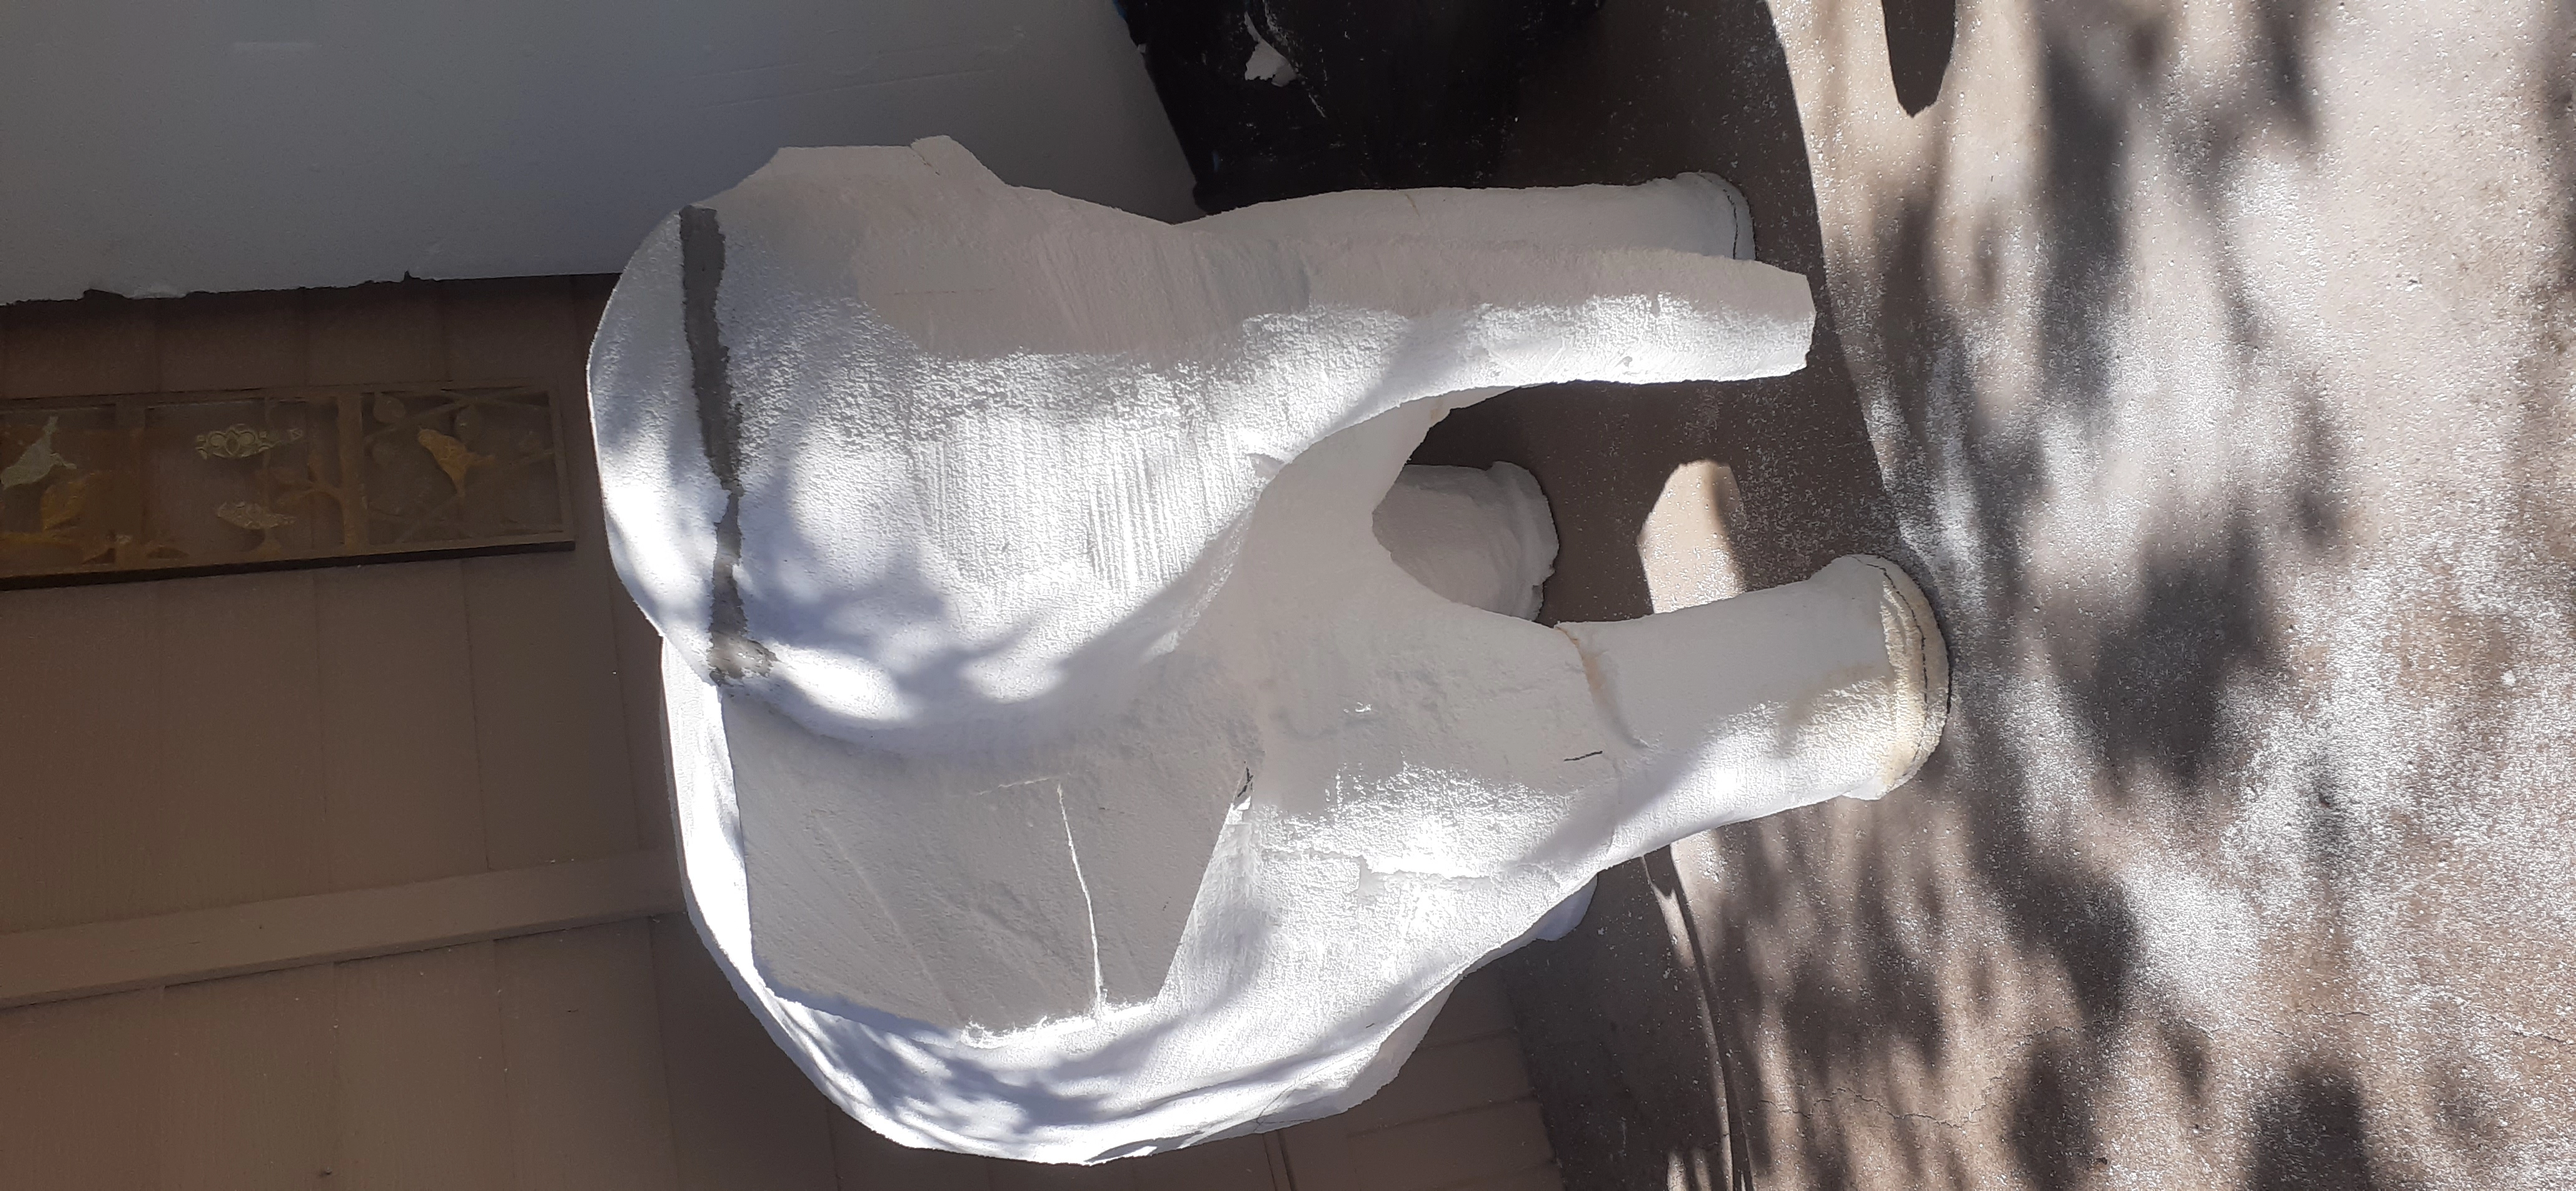 How to detail foam sculptures 